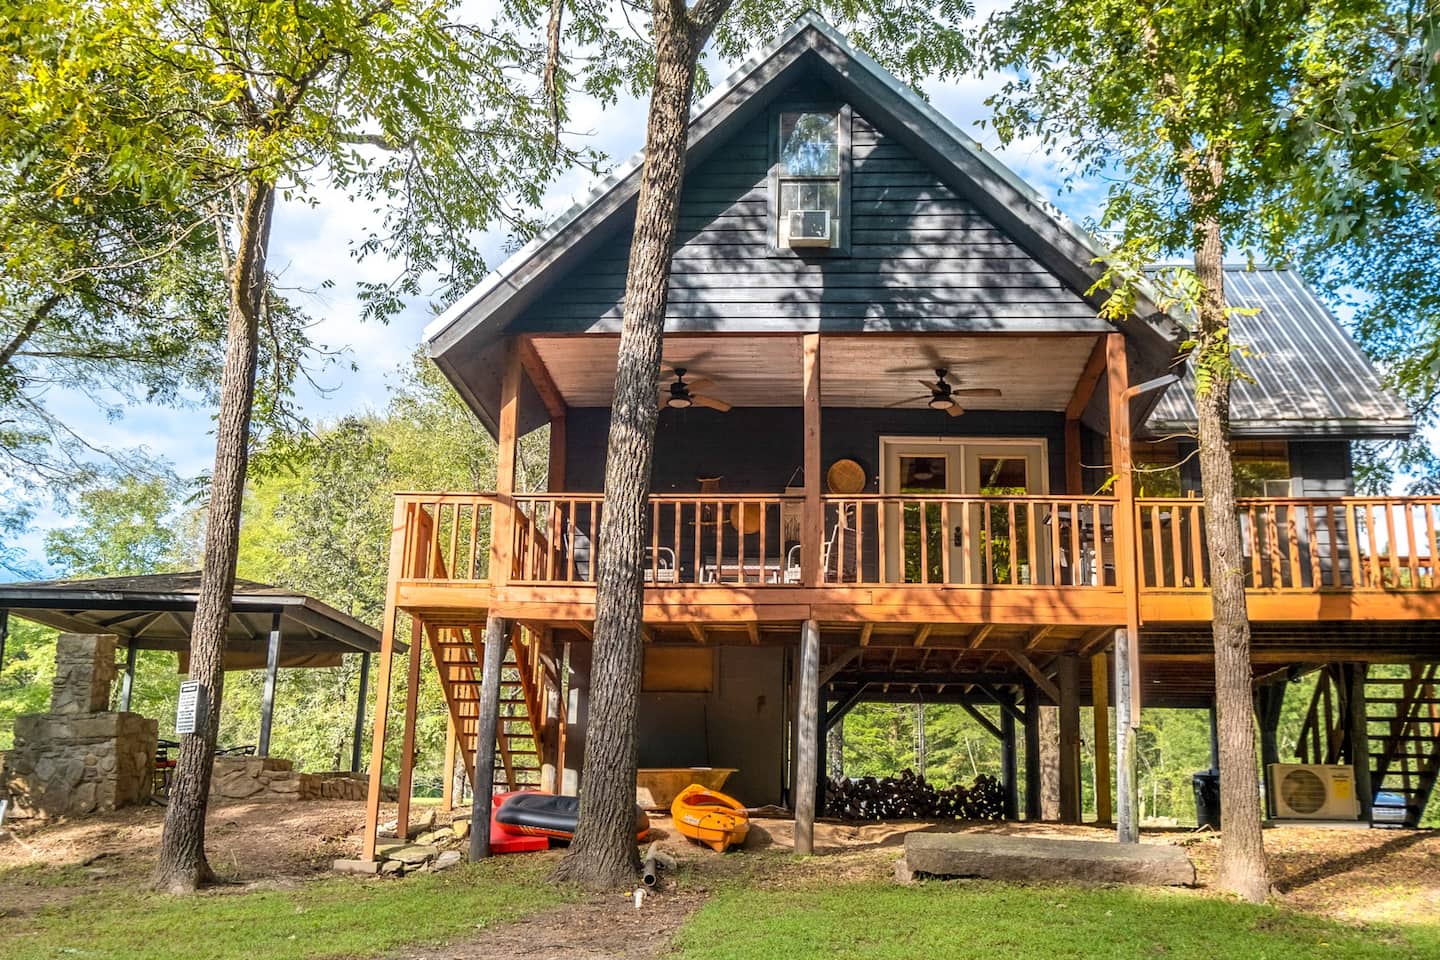 The Camphouse Cabin in Arkansas